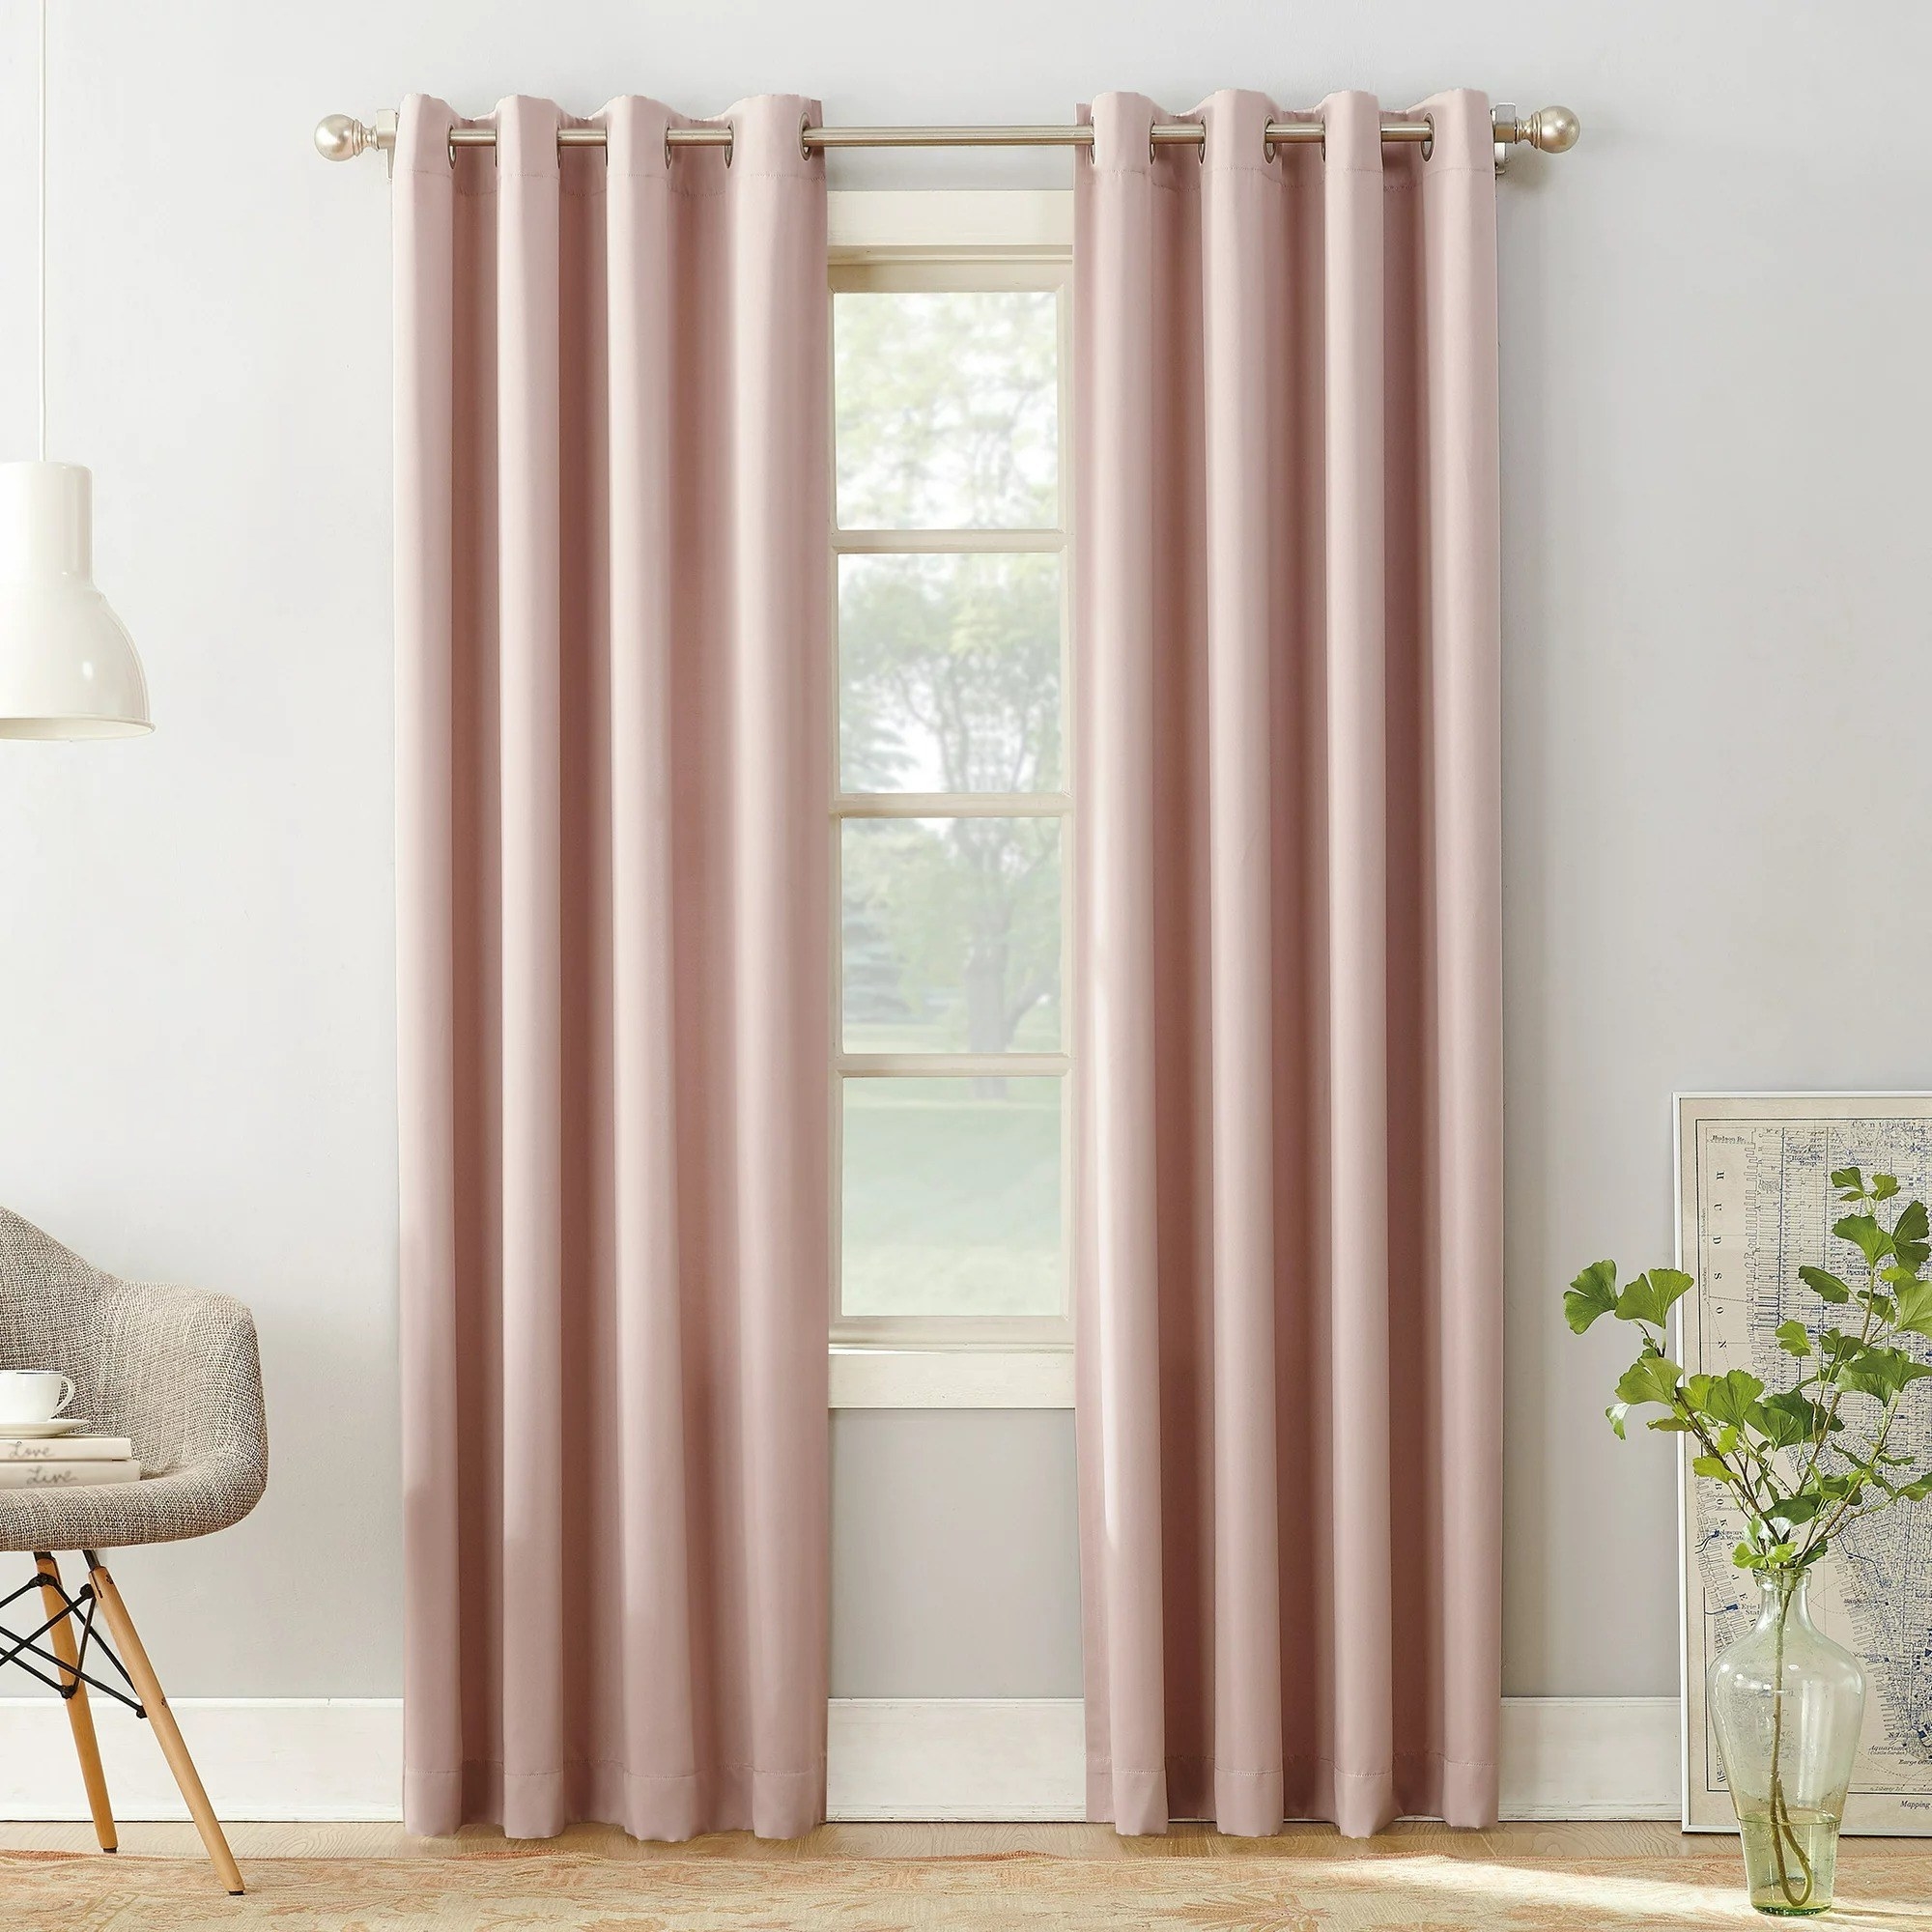 A blush curtain panel on a curtain rod in a room near a window